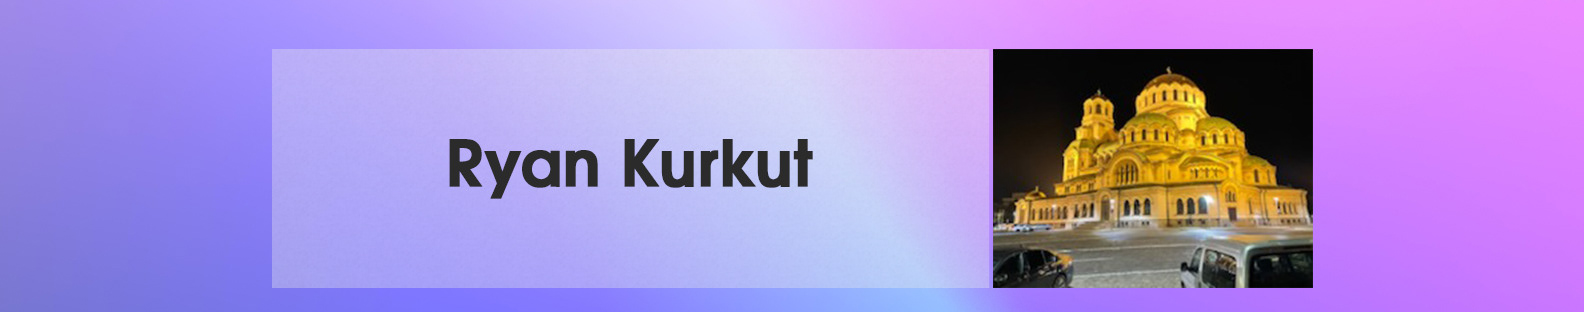 Ryan Kurkut's profile banner